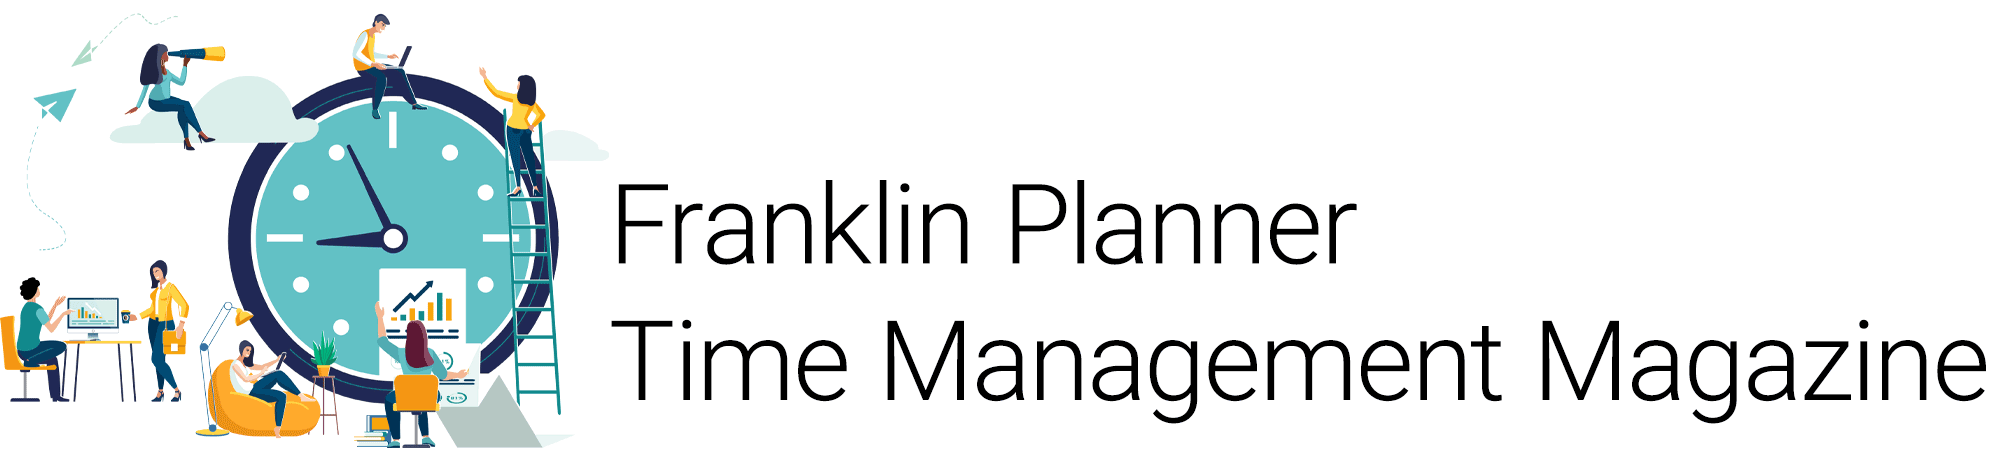 Franklin Planner Time Management Magazine